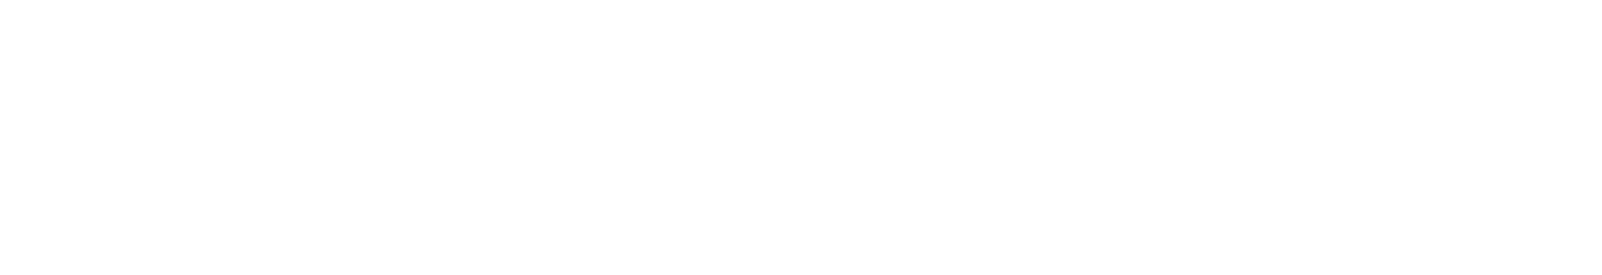 Manitex International logo grand pour les fonds sombres (PNG transparent)